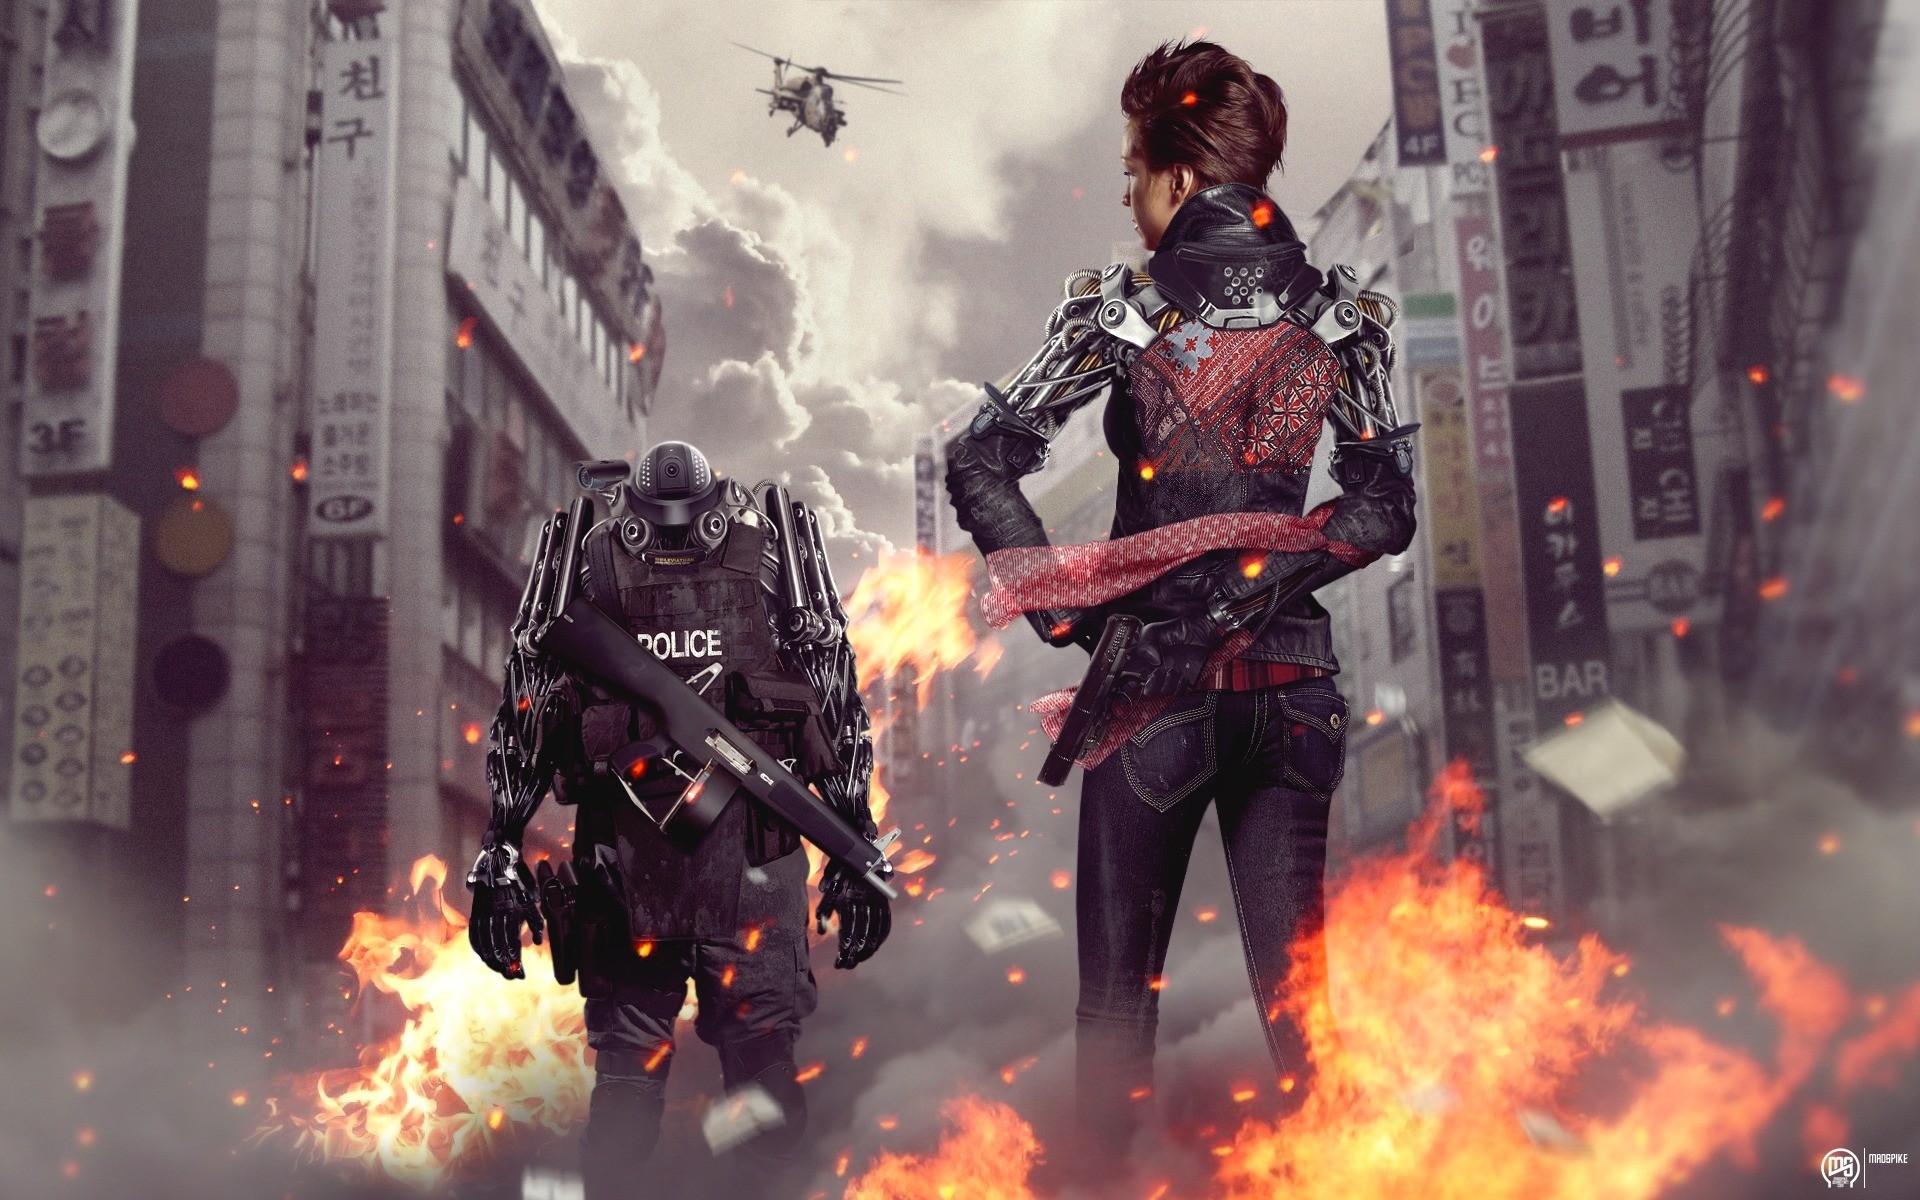 Artwork Fantasy Art Digital Art Cyborg Women Apocalyptic City Rebel Robot Police Science Fiction Gun 1920x1200